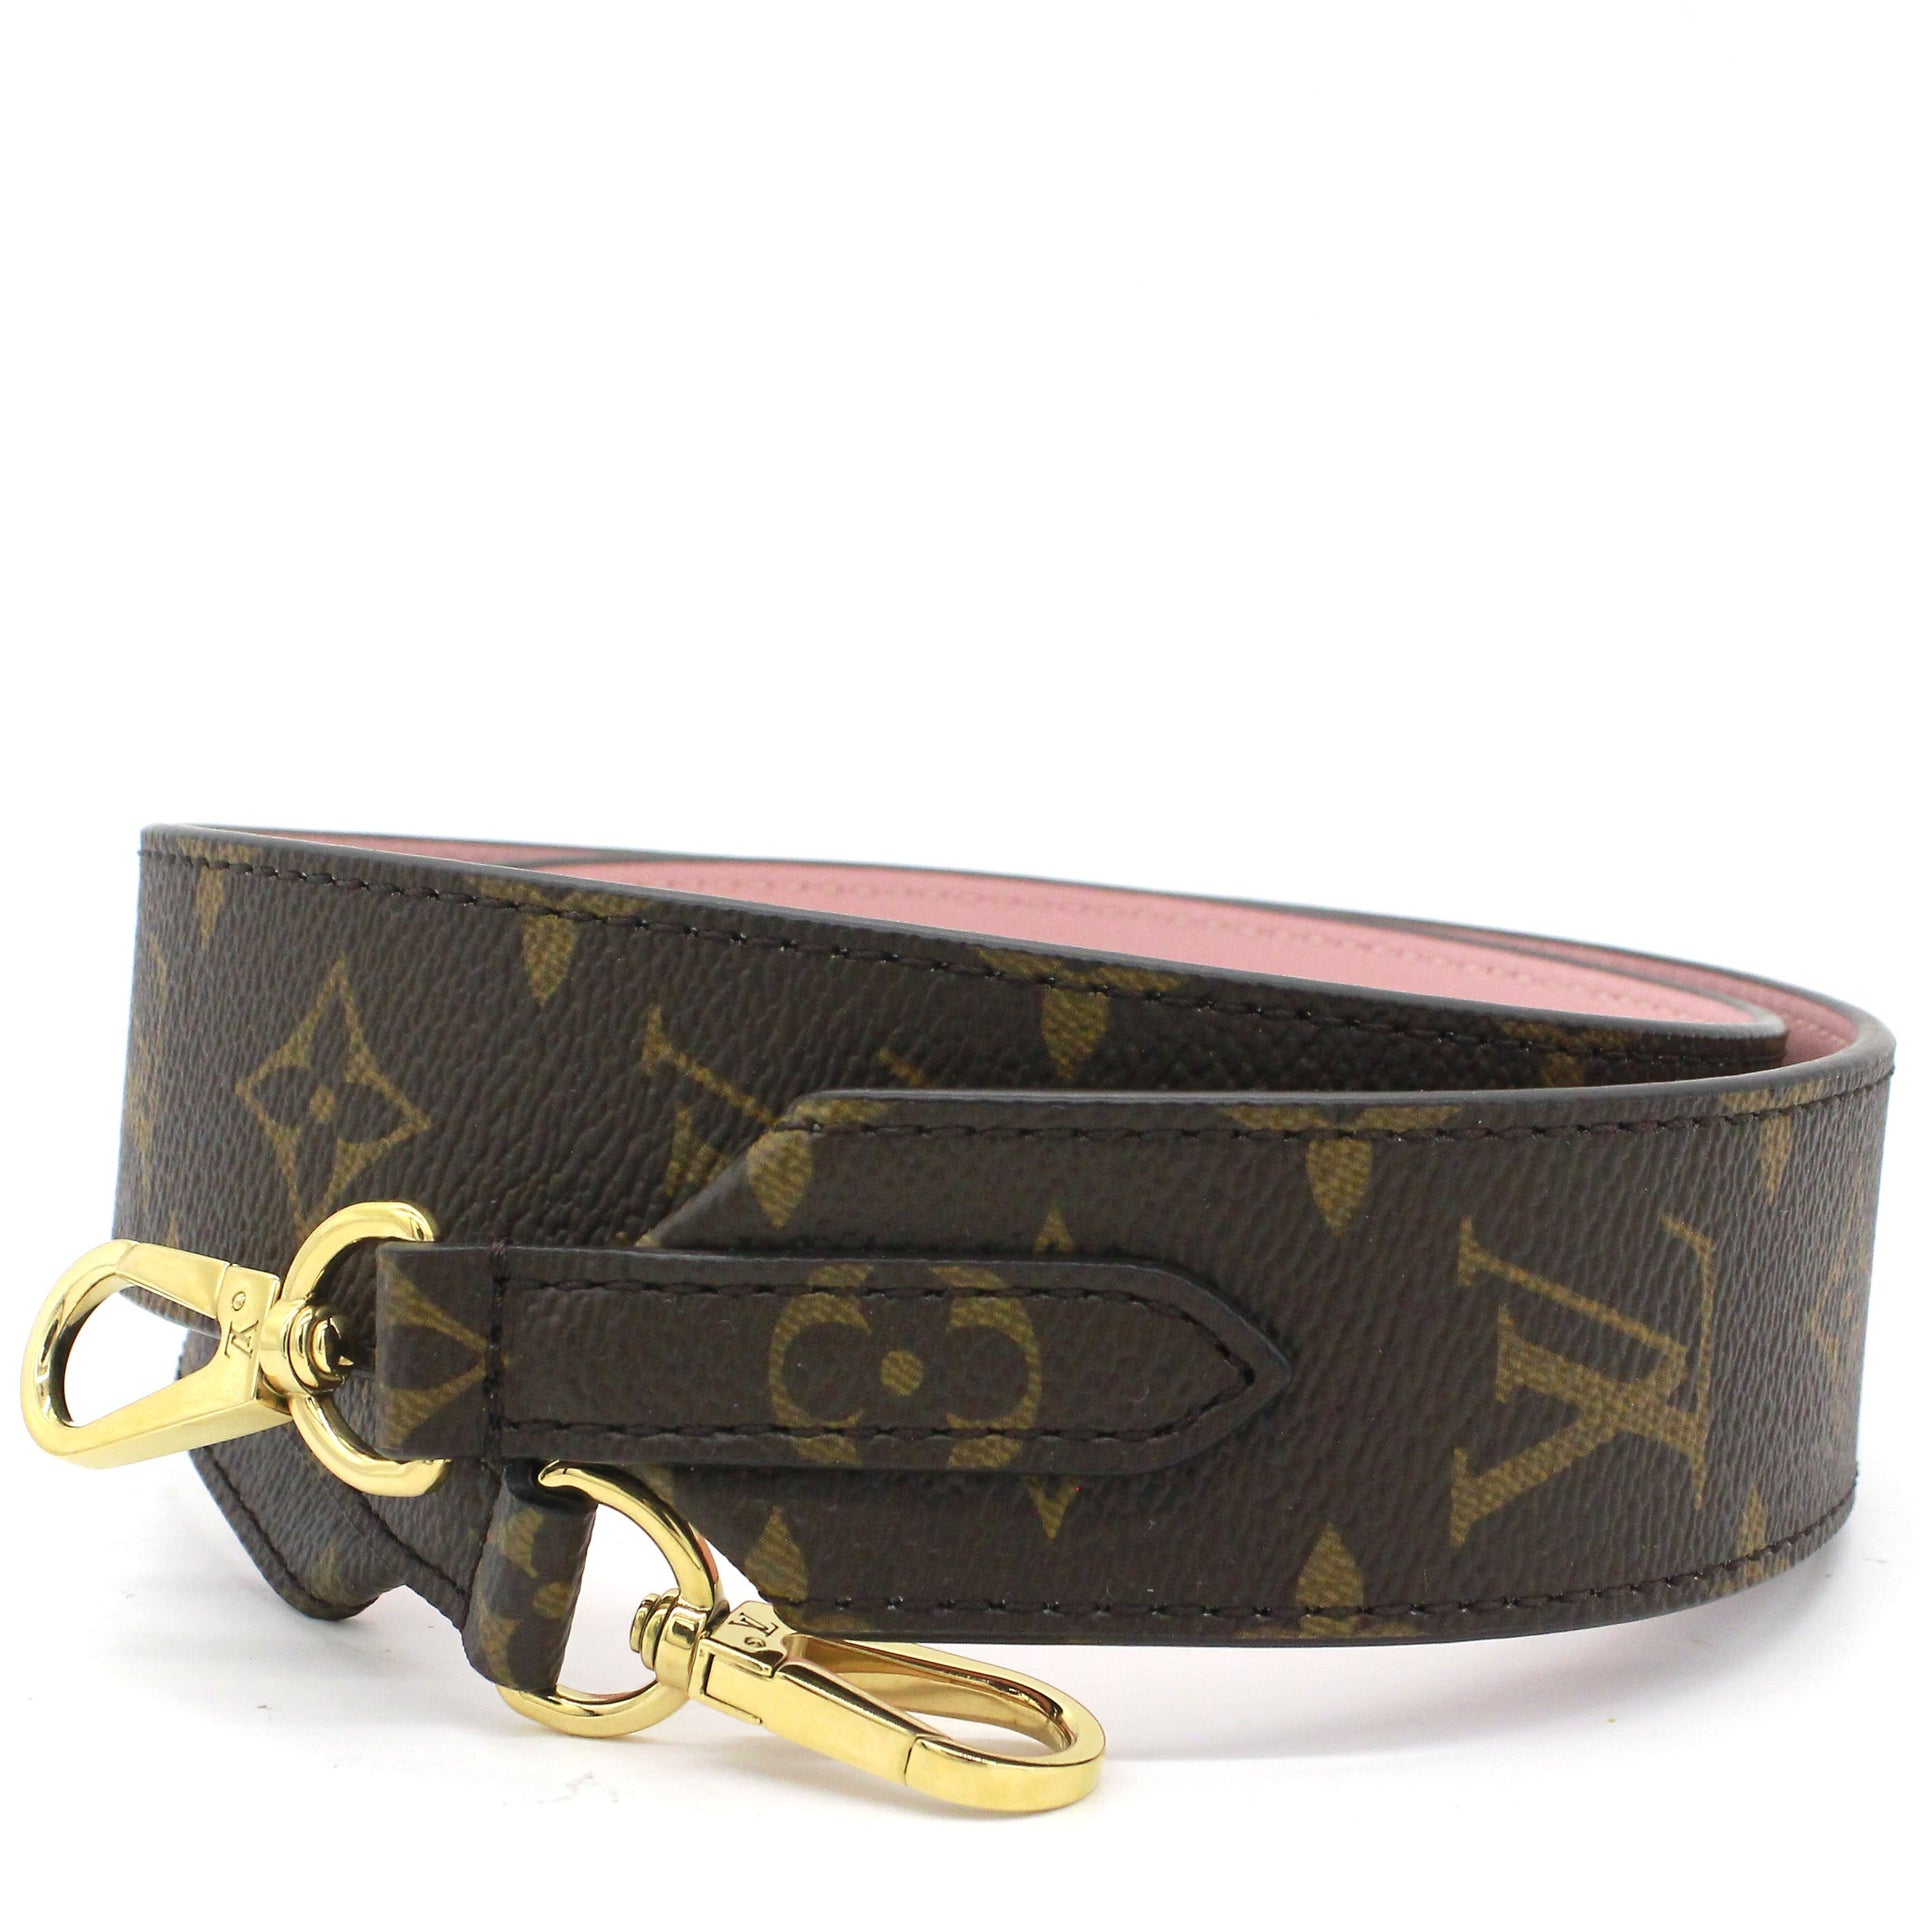 Louis Vuitton leather Genuine belt Missing Original Box men's belt